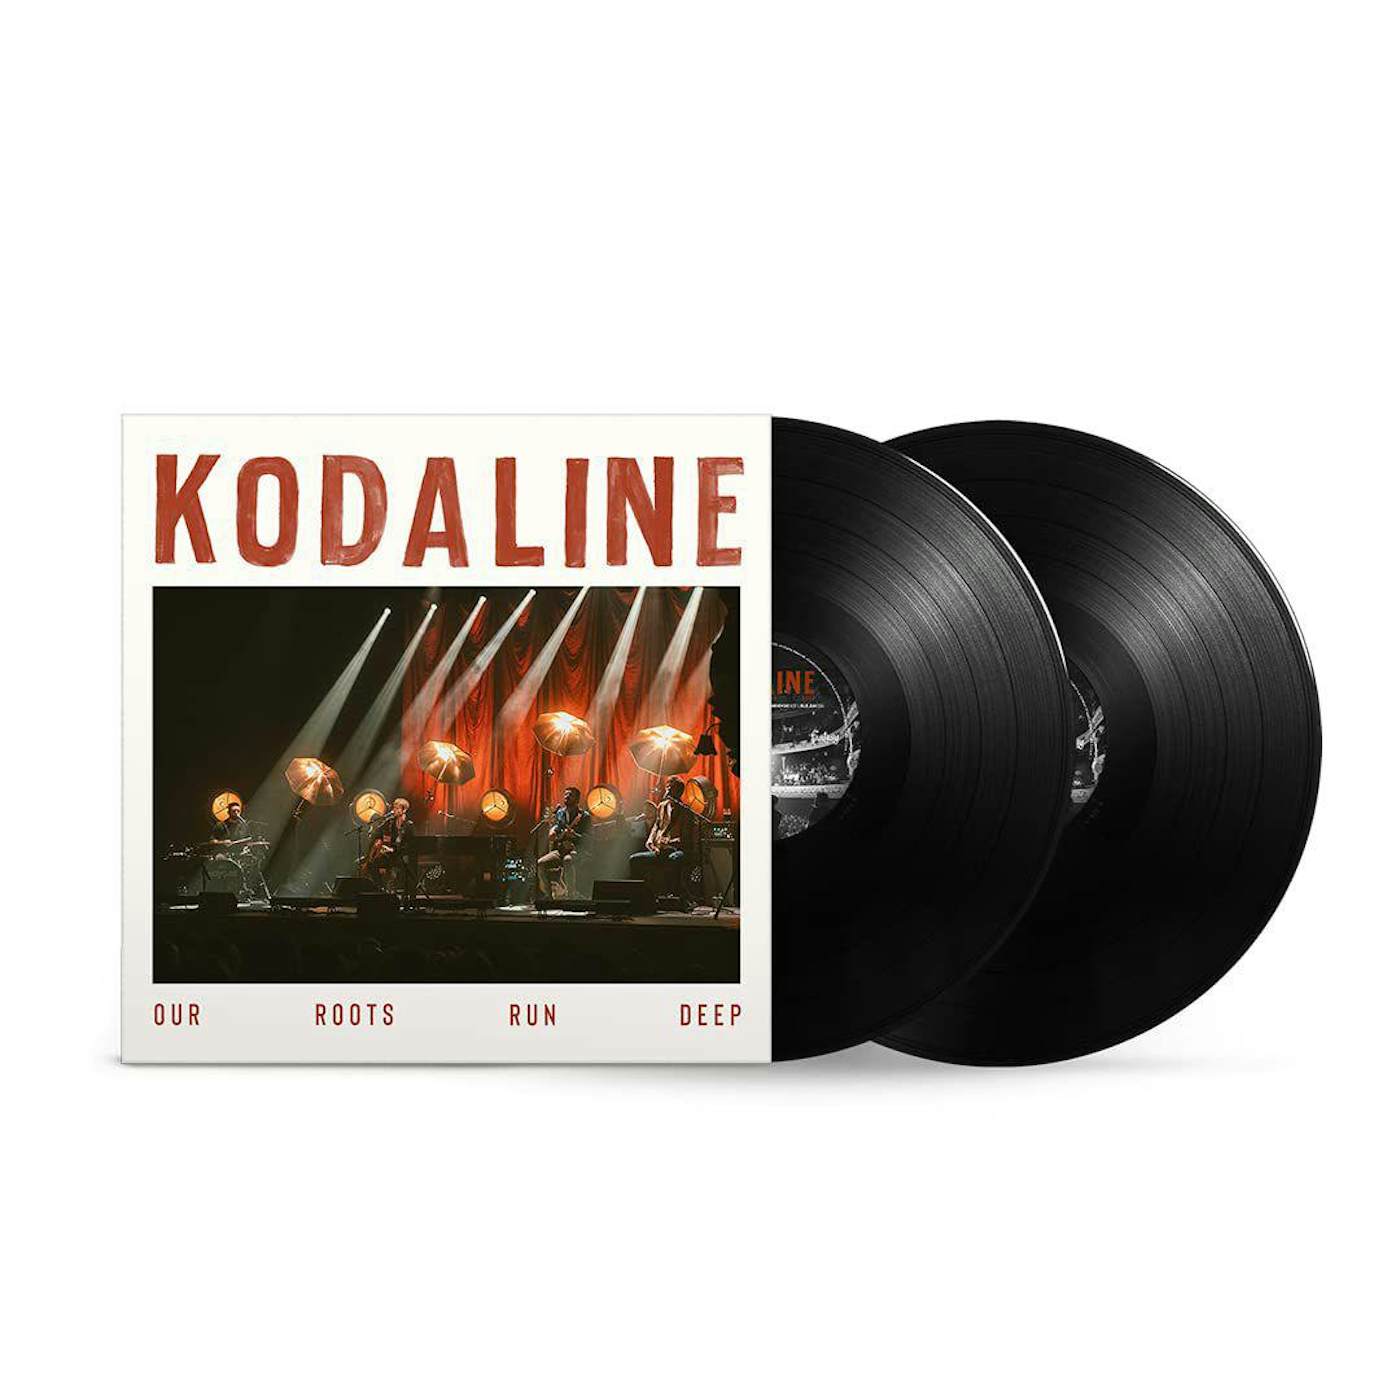 Kodaline Our Roots Run Deep vinyl record